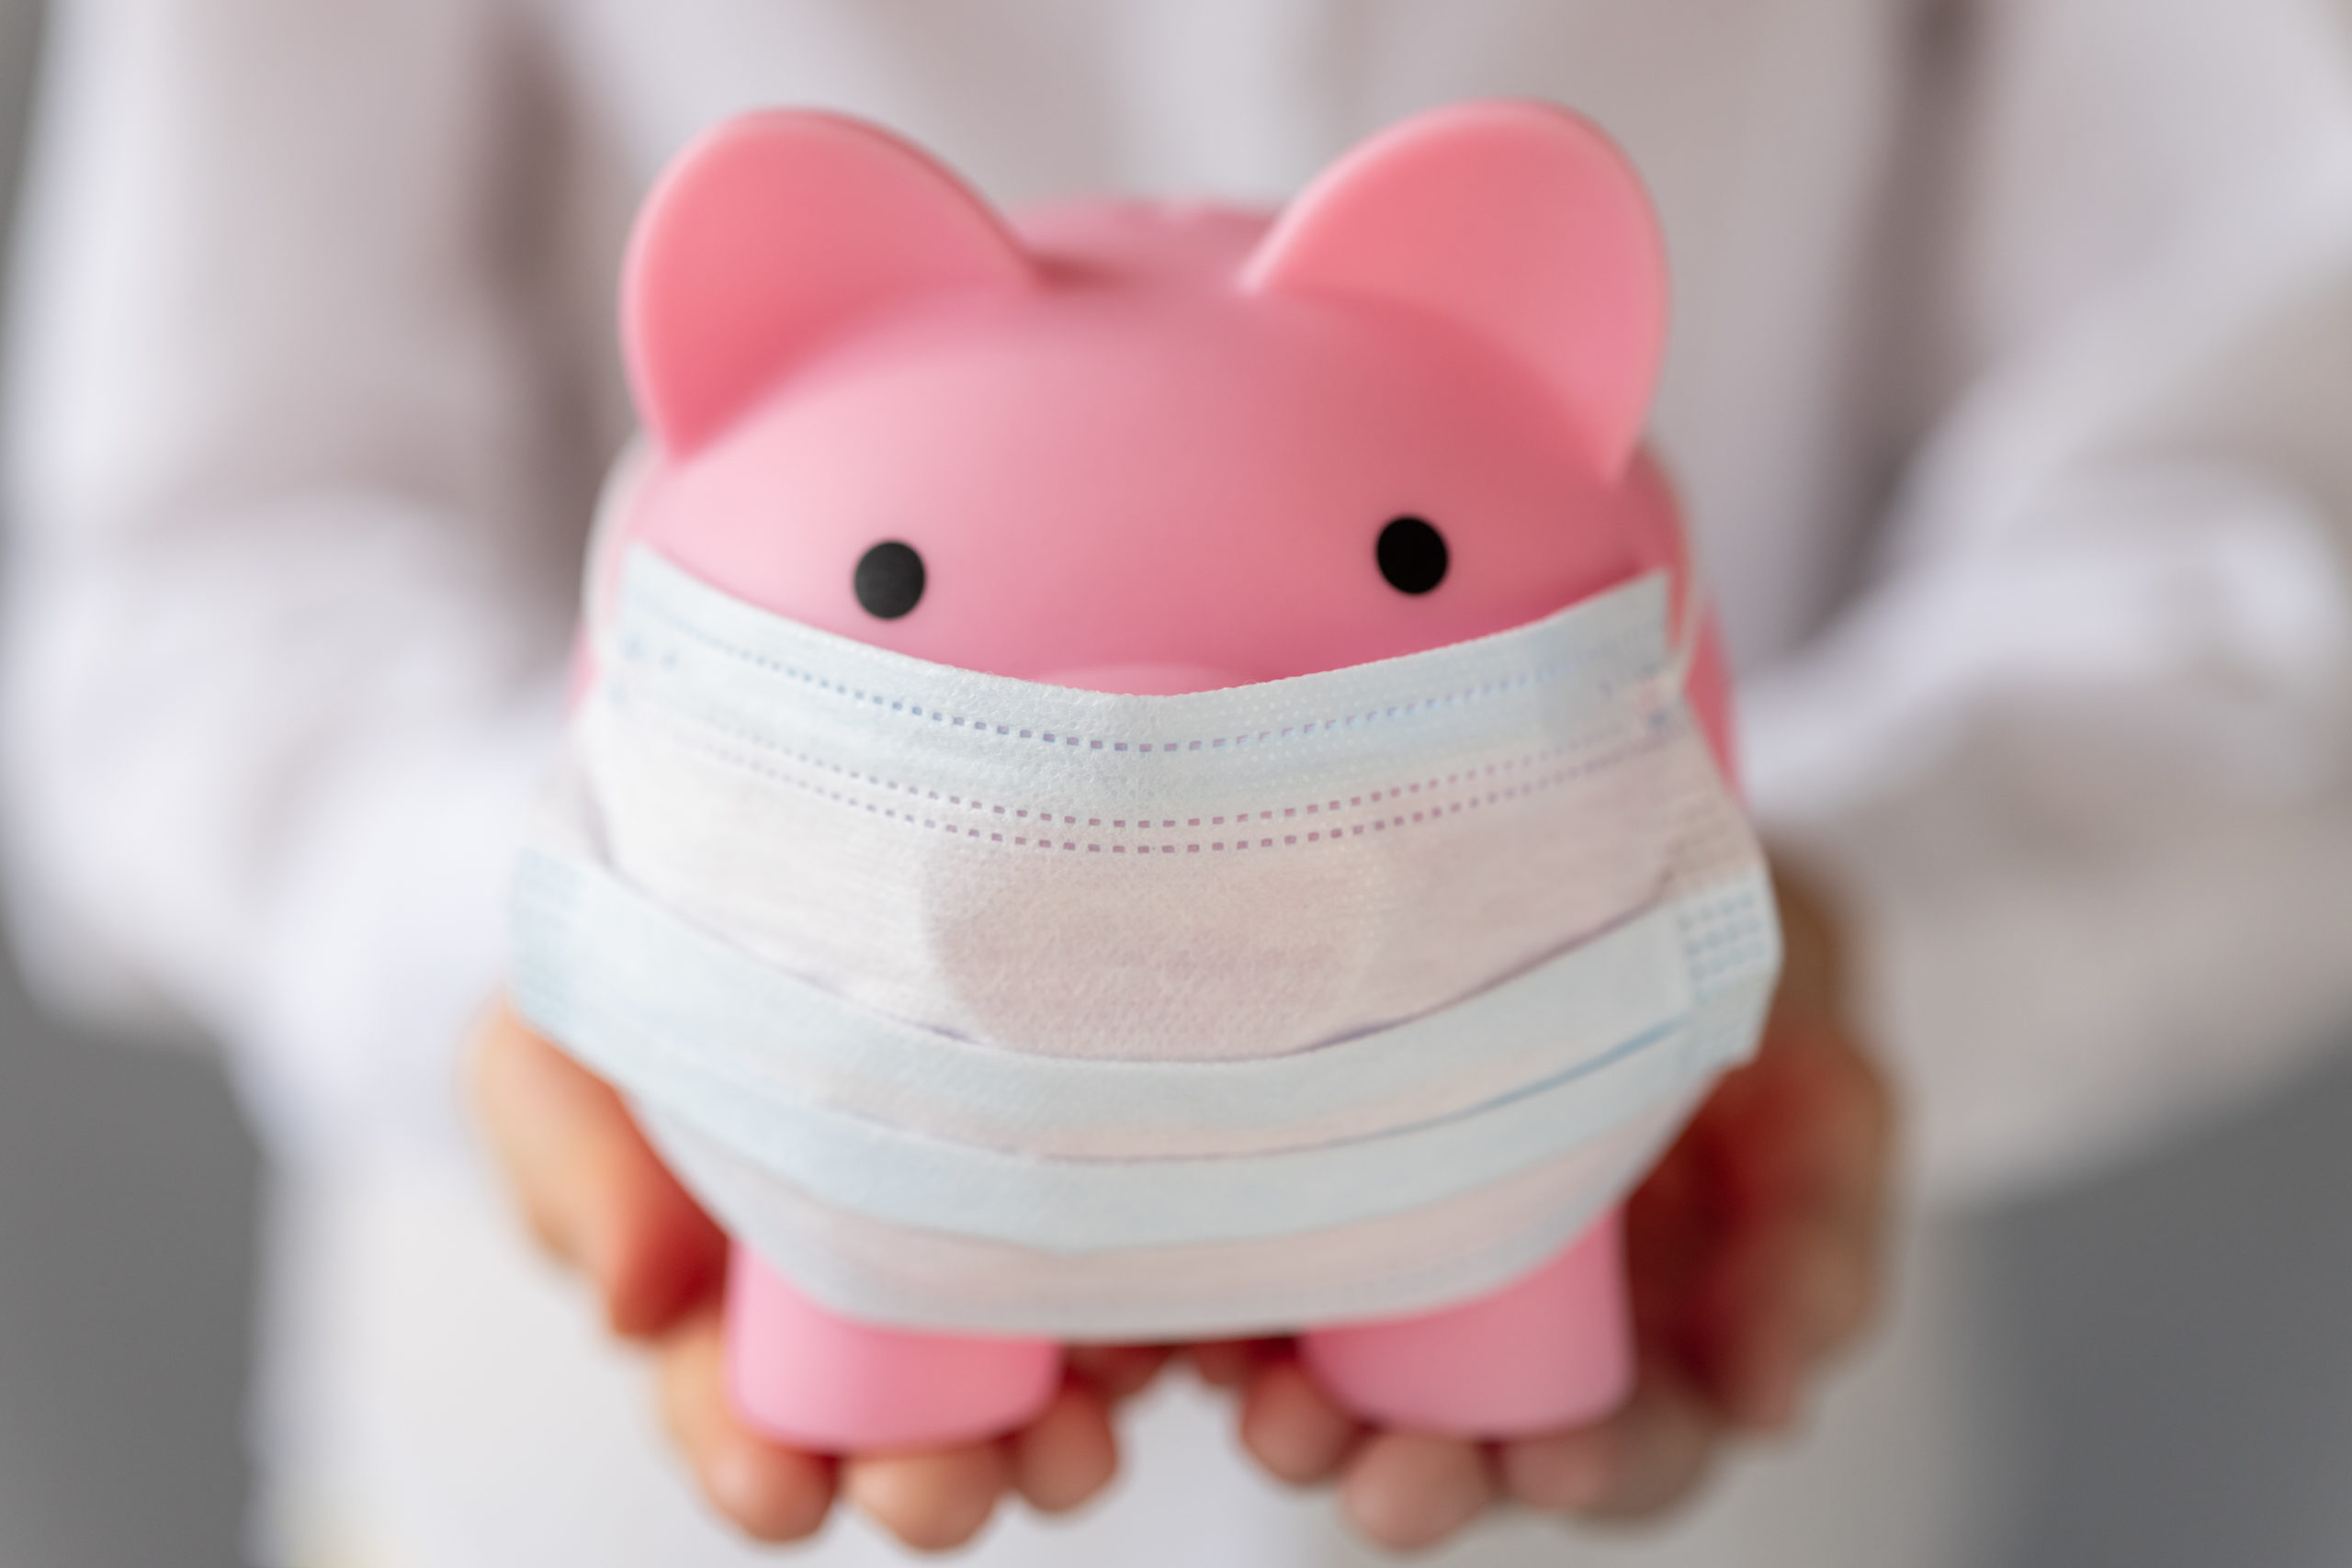 Piggybank wearing medical mask in children`s hands